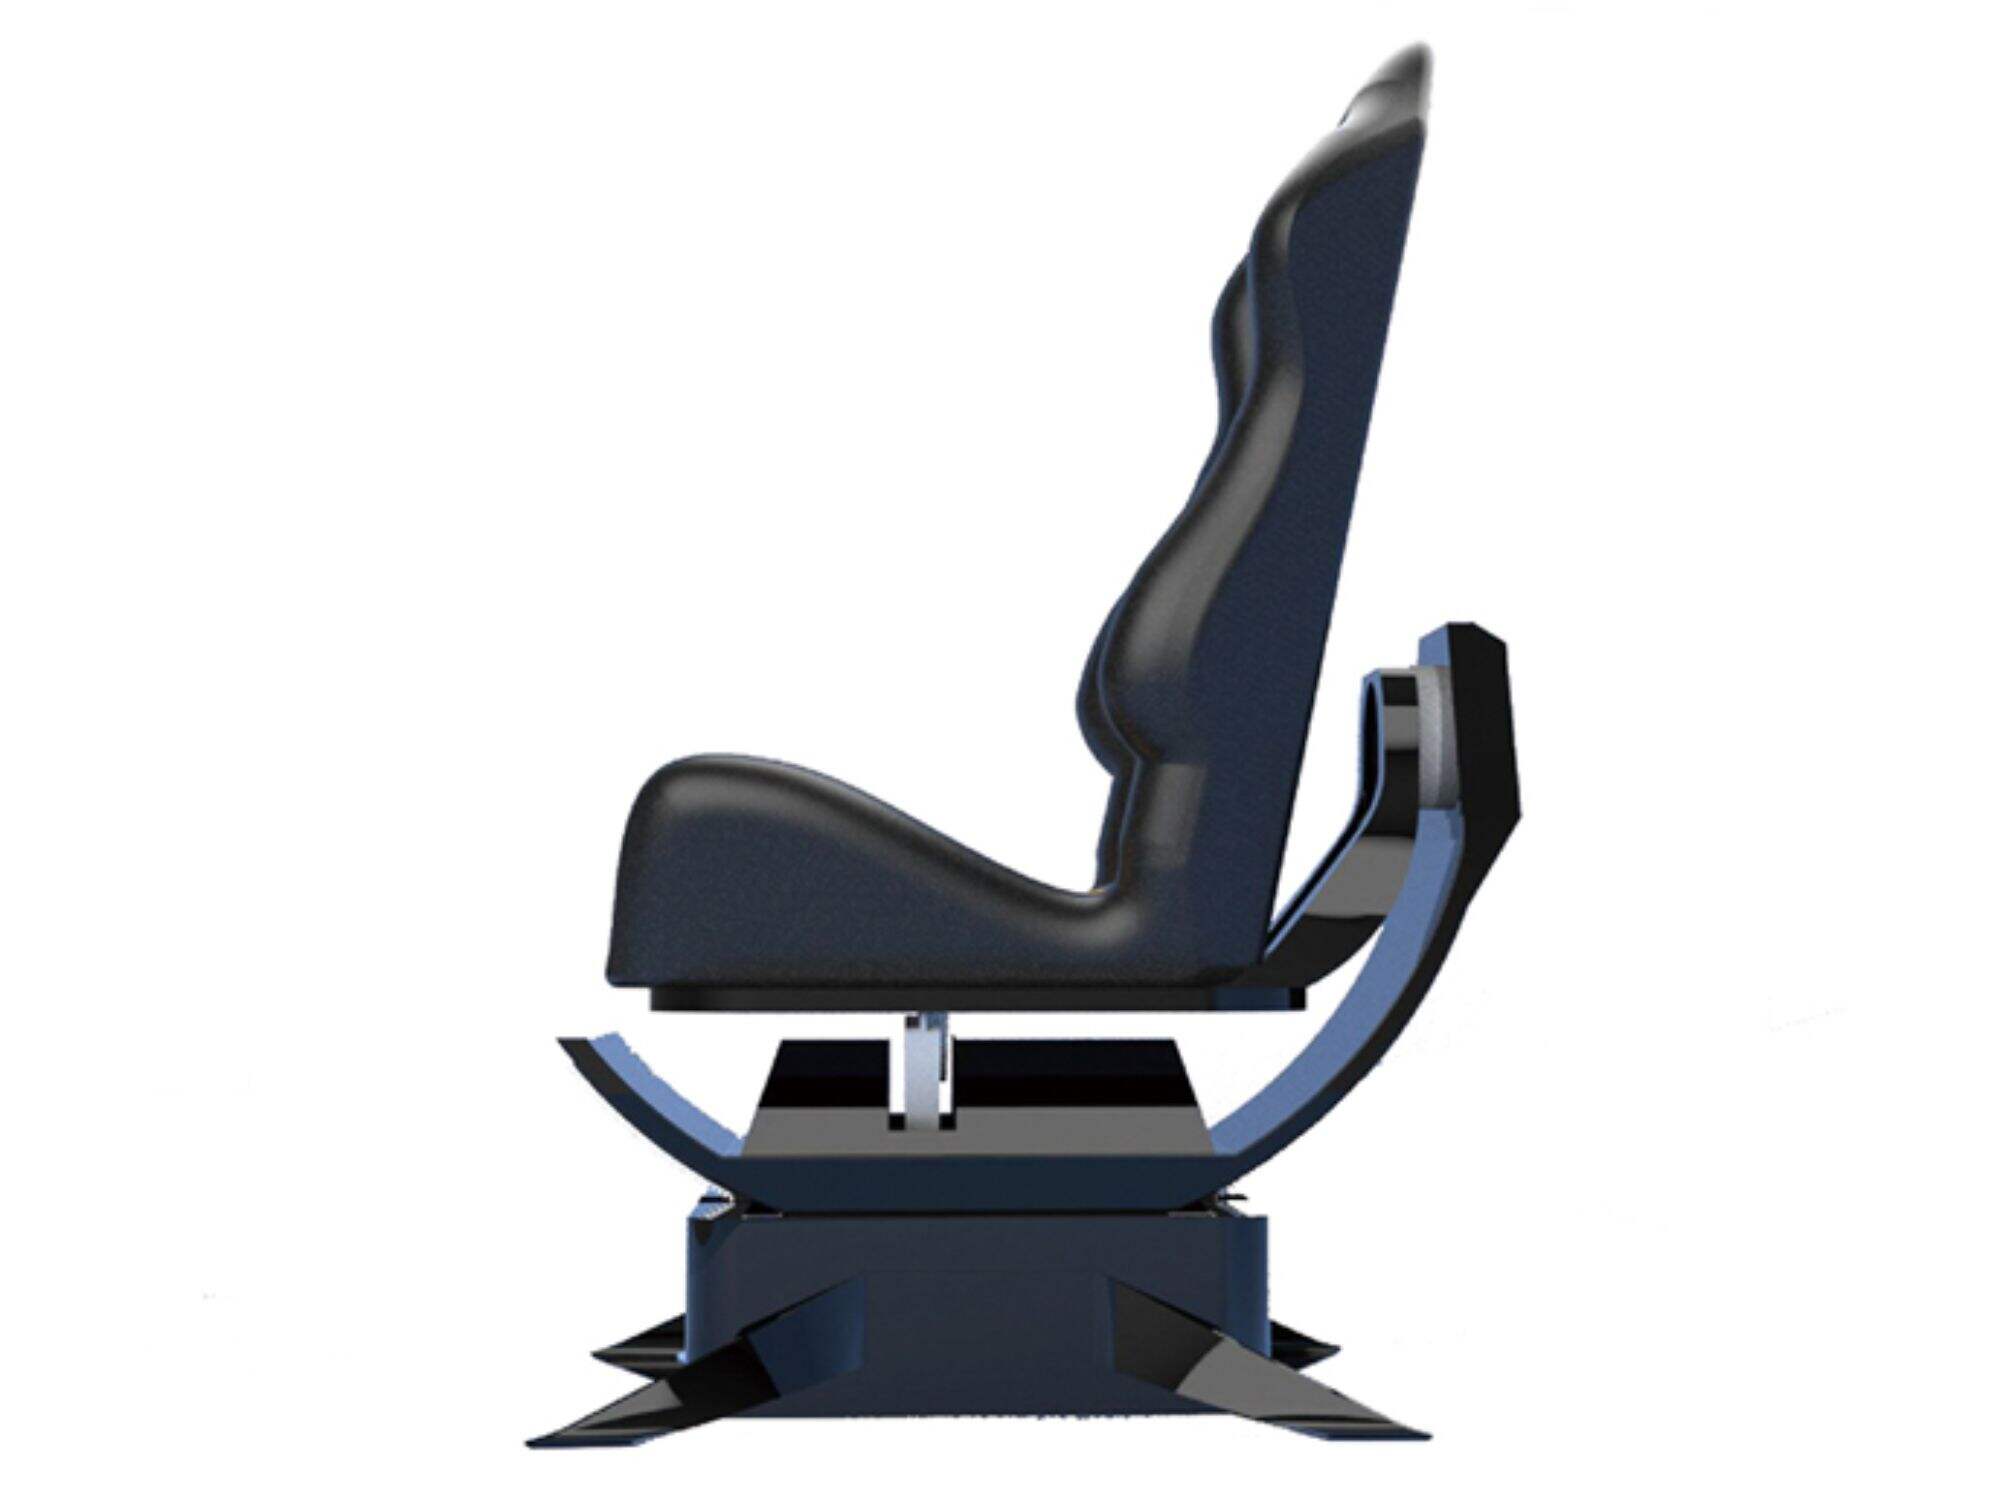 VR Somatosensory Simulator Chair For 3A Games